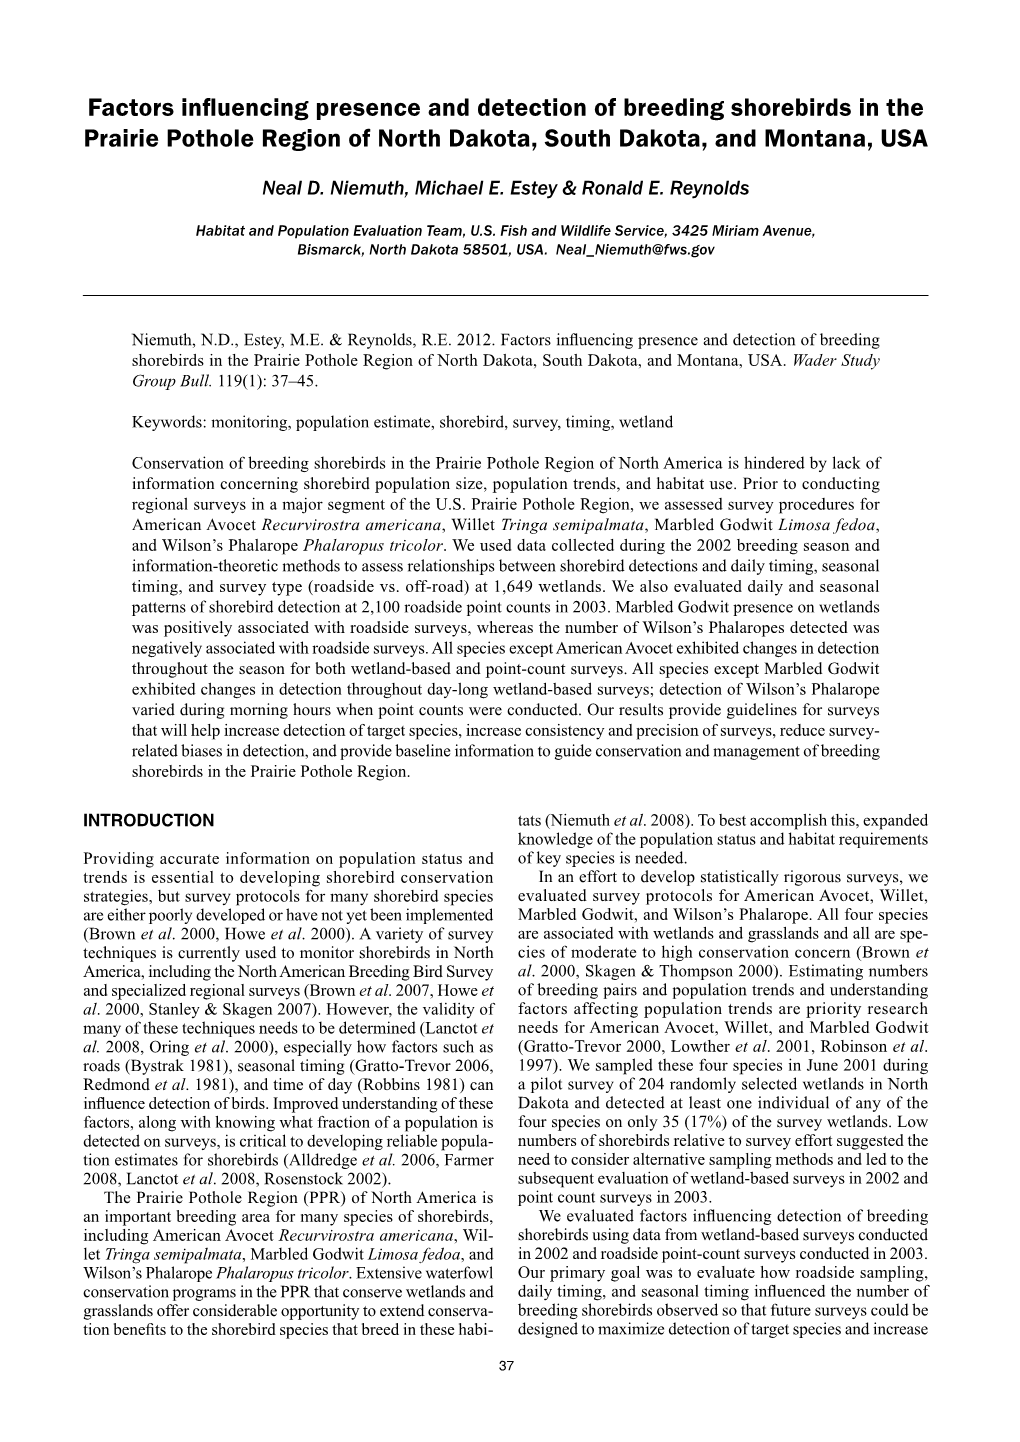 Factors Influencing Presence and Detection of Breeding Shorebirds in the Prairie Pothole Region of North Dakota, South Dakota, and Montana, USA